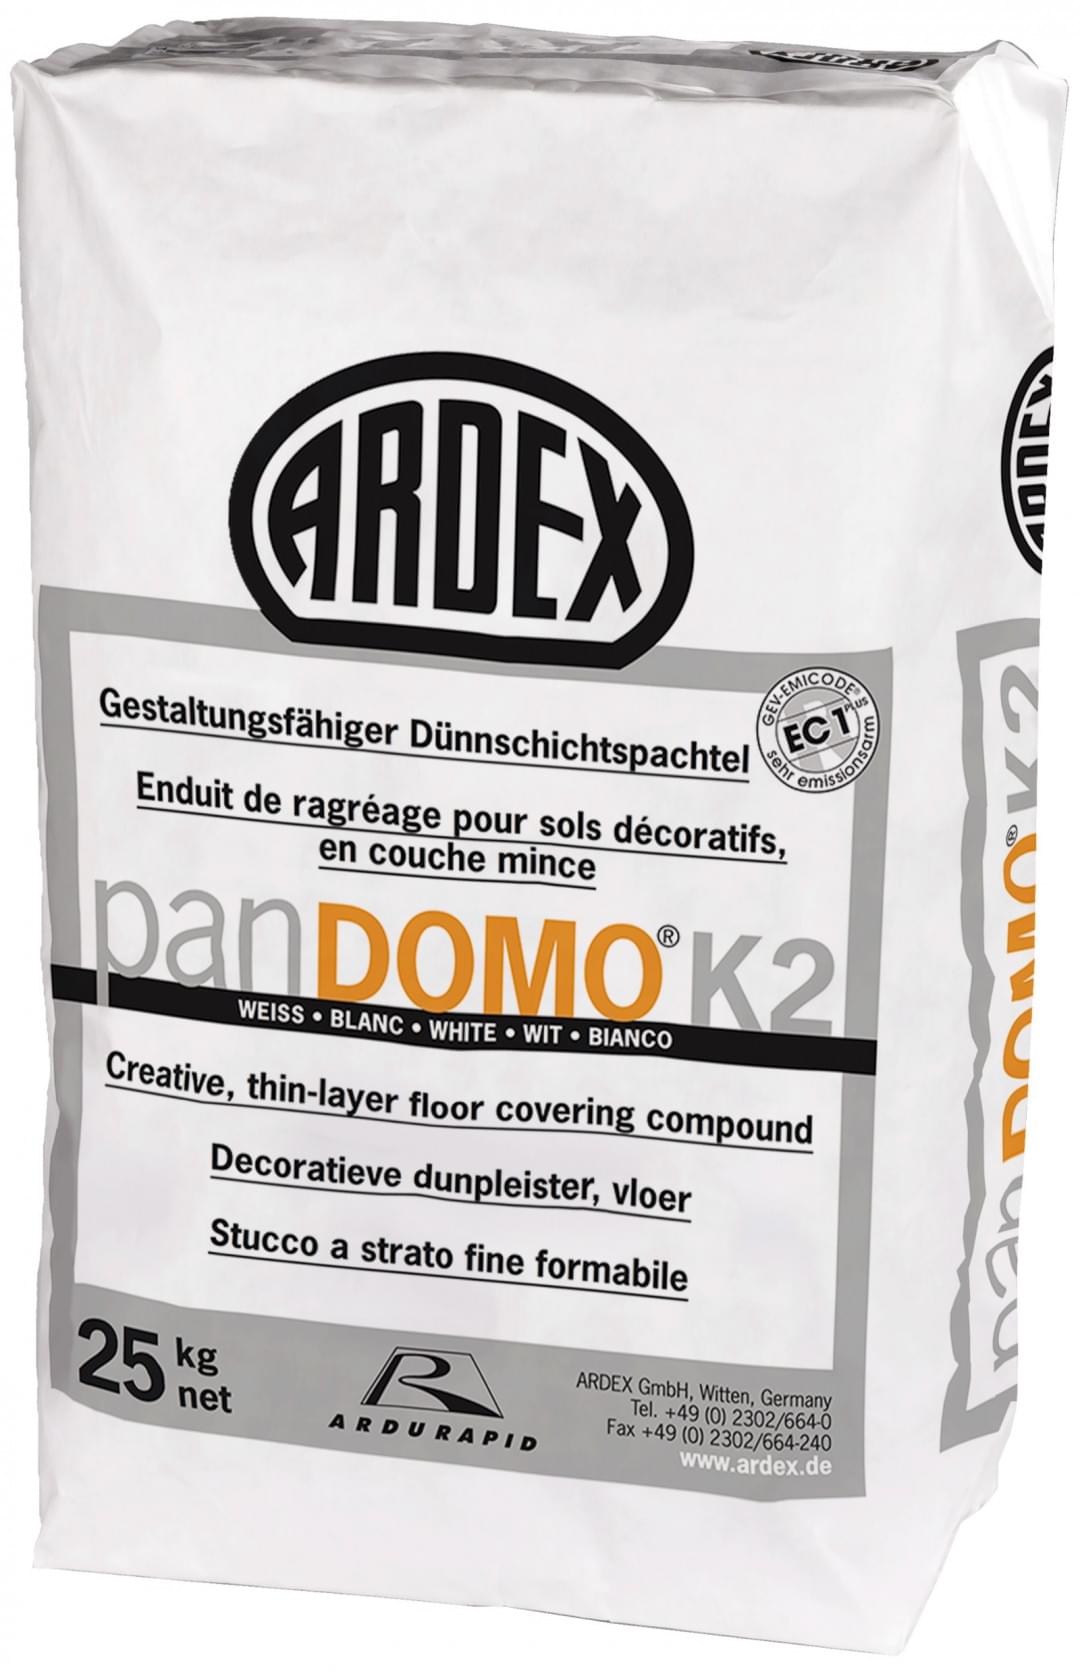 PANDOMO® K2 from ARDEX